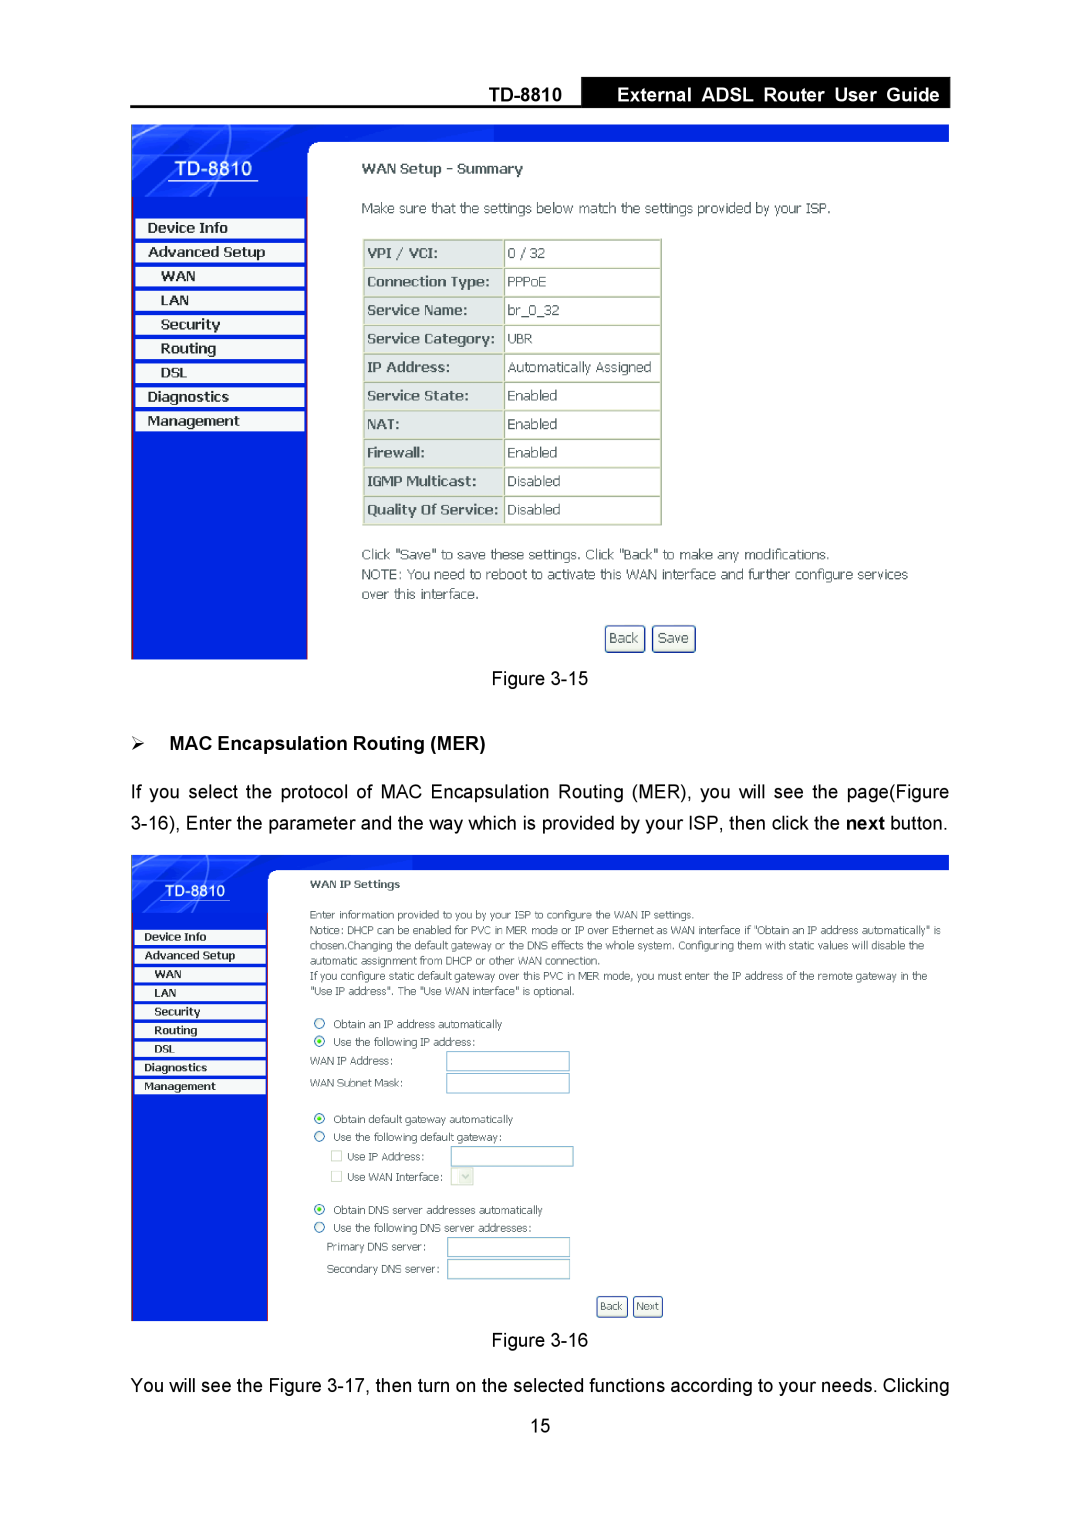 TP-Link TD-8810B manual External ADSL Router User Guide, ¾ MAC Encapsulation Routing MER 